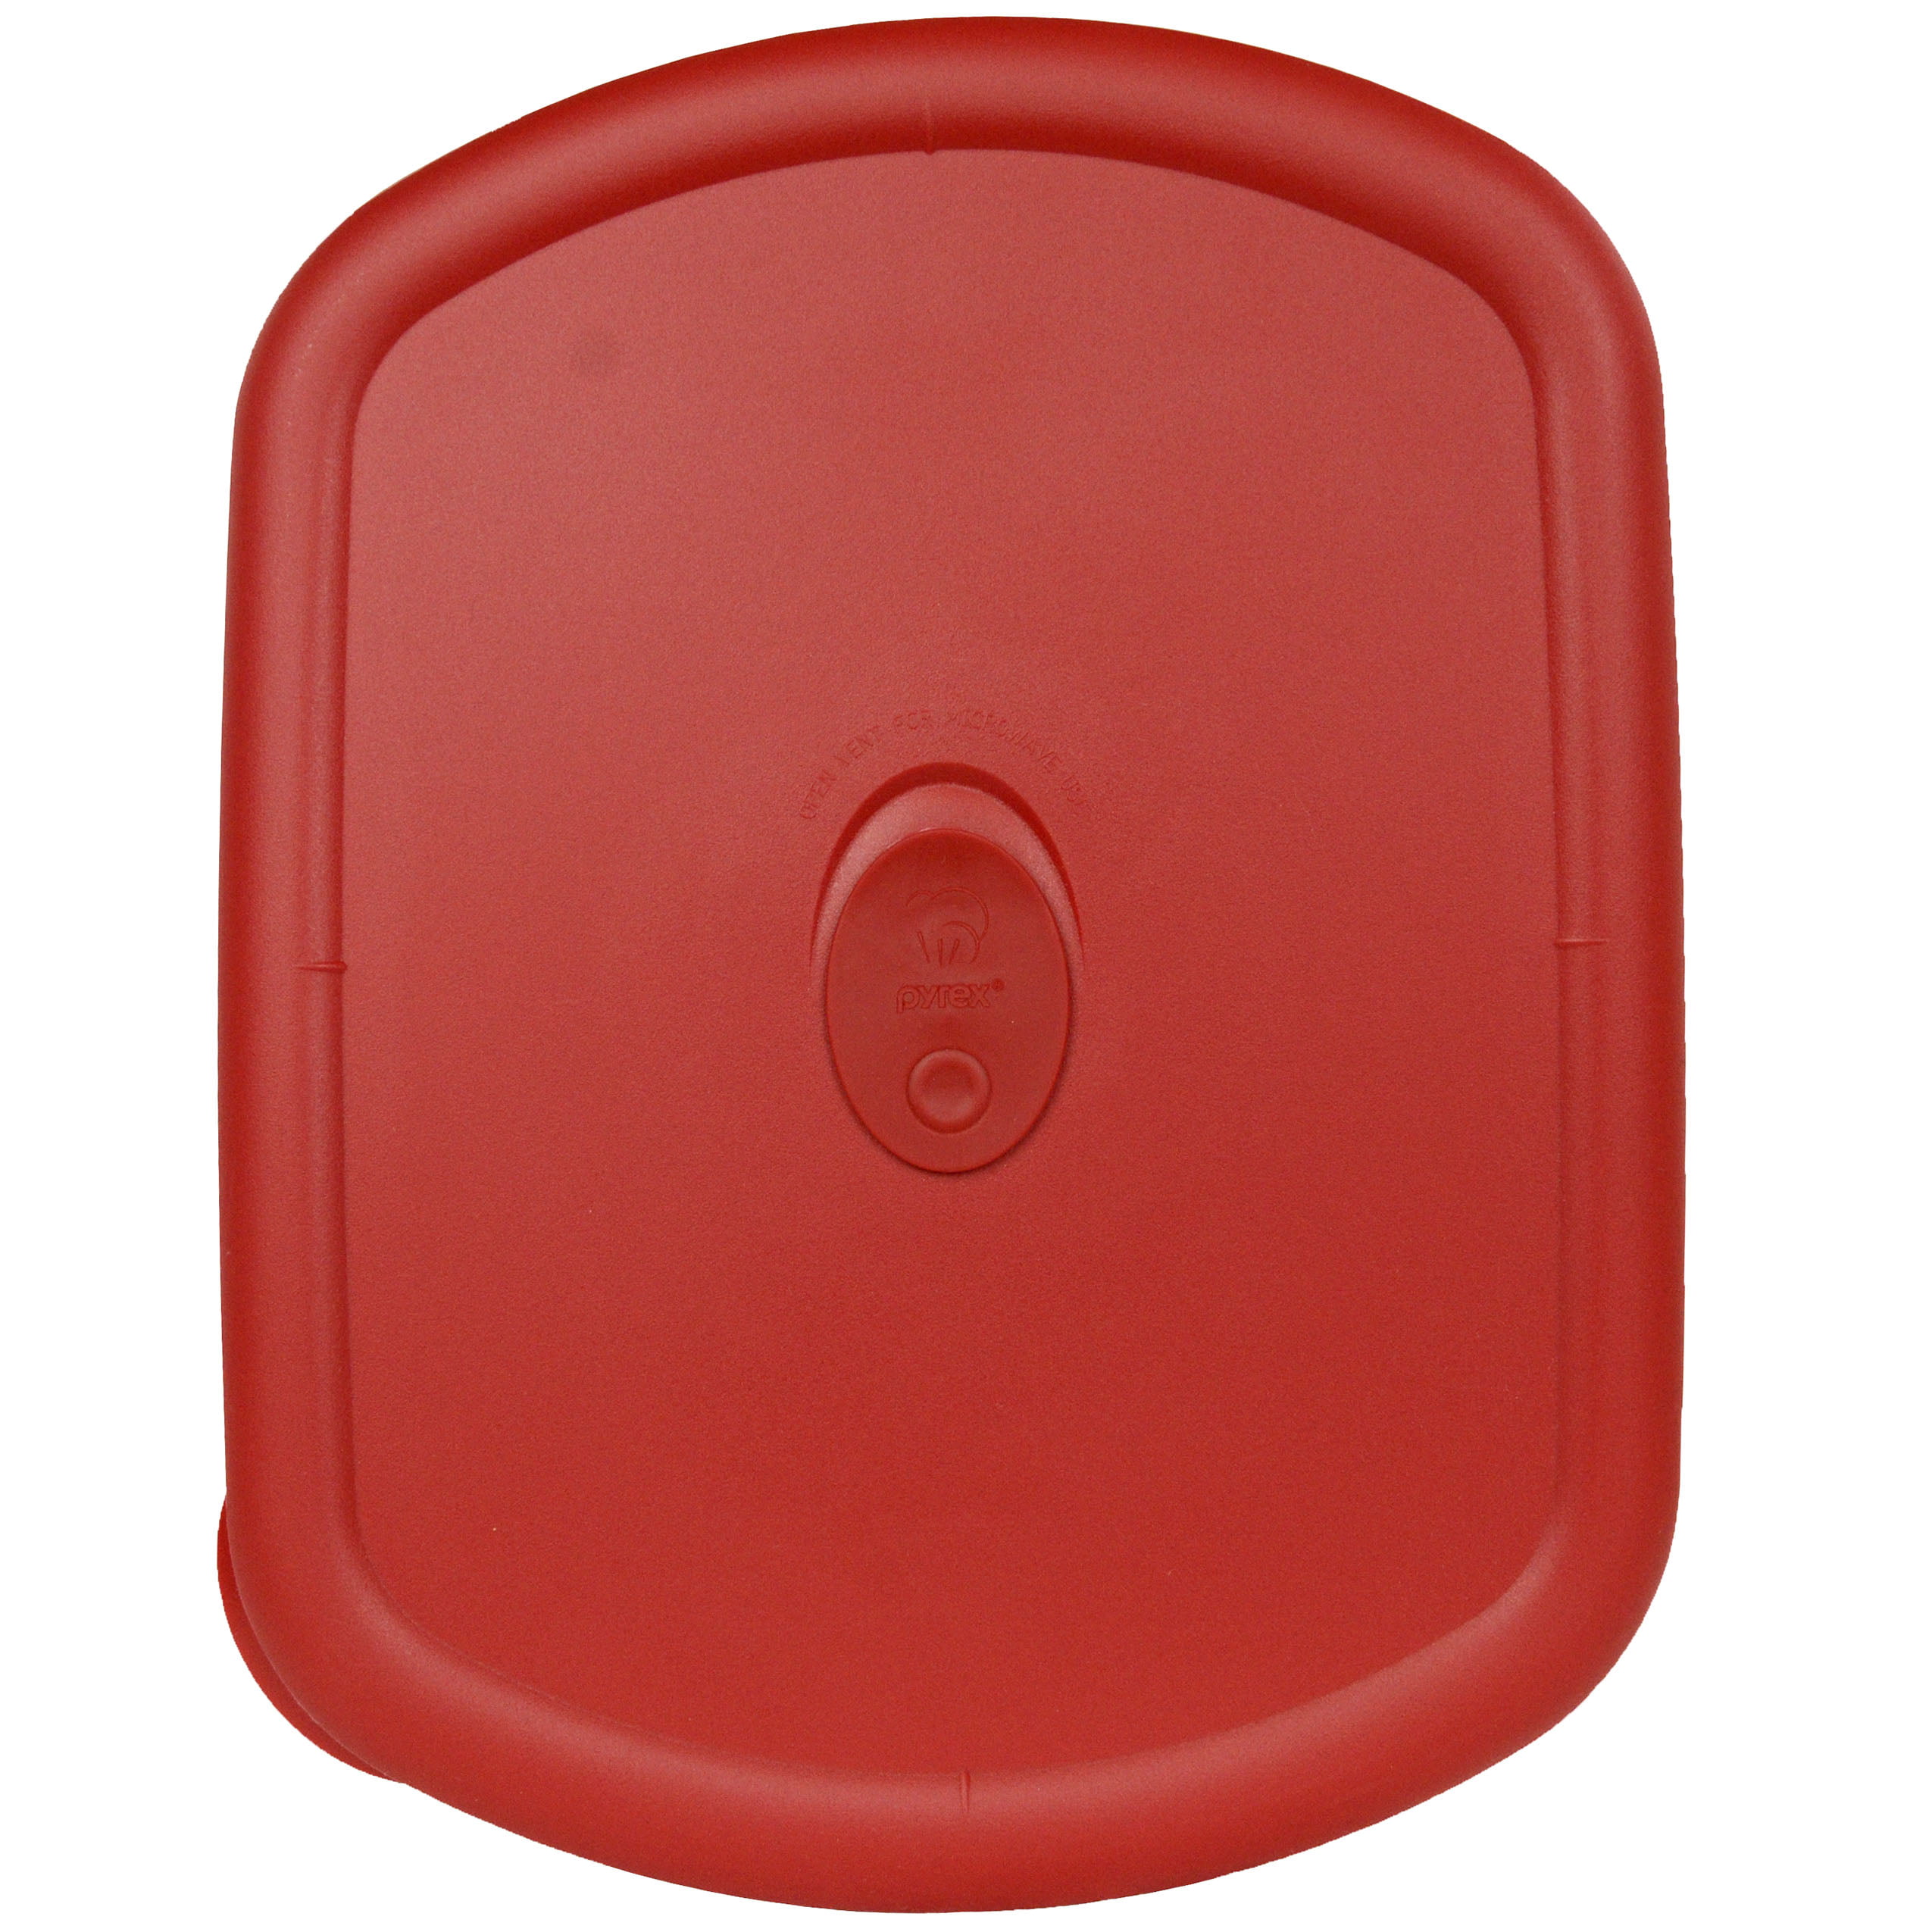 Pyrex 7211r 4-Lock/Freshlock Poppy Red Plastic Storage Replacement Lid (2-Pack)